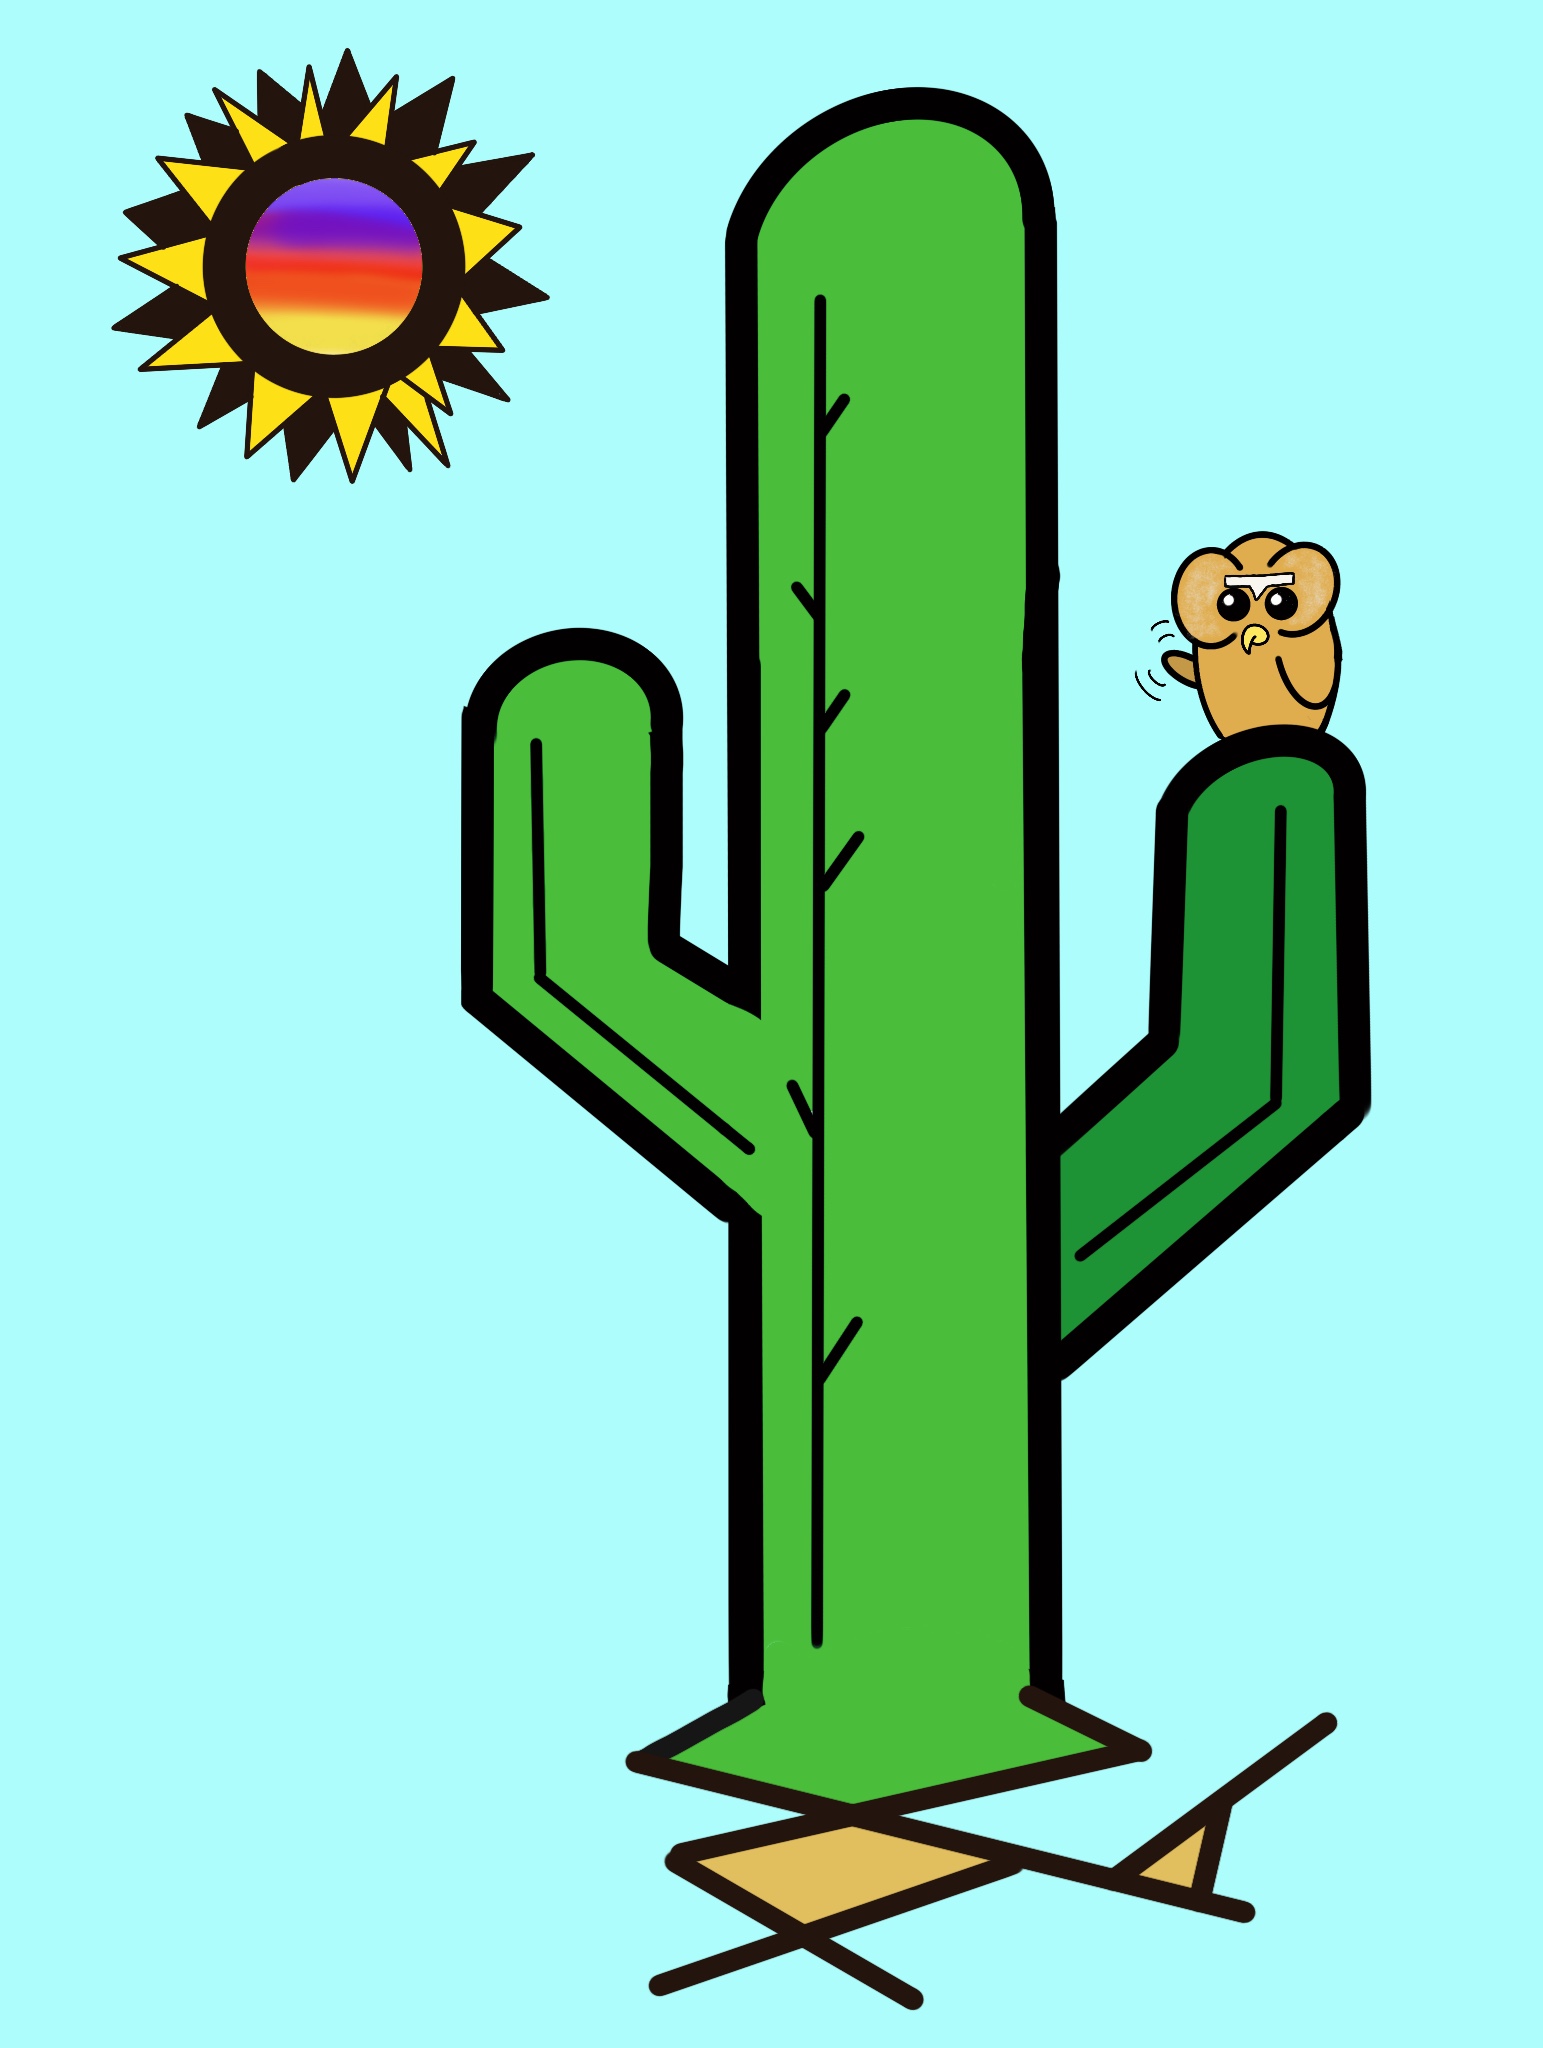 Cactus on Owl